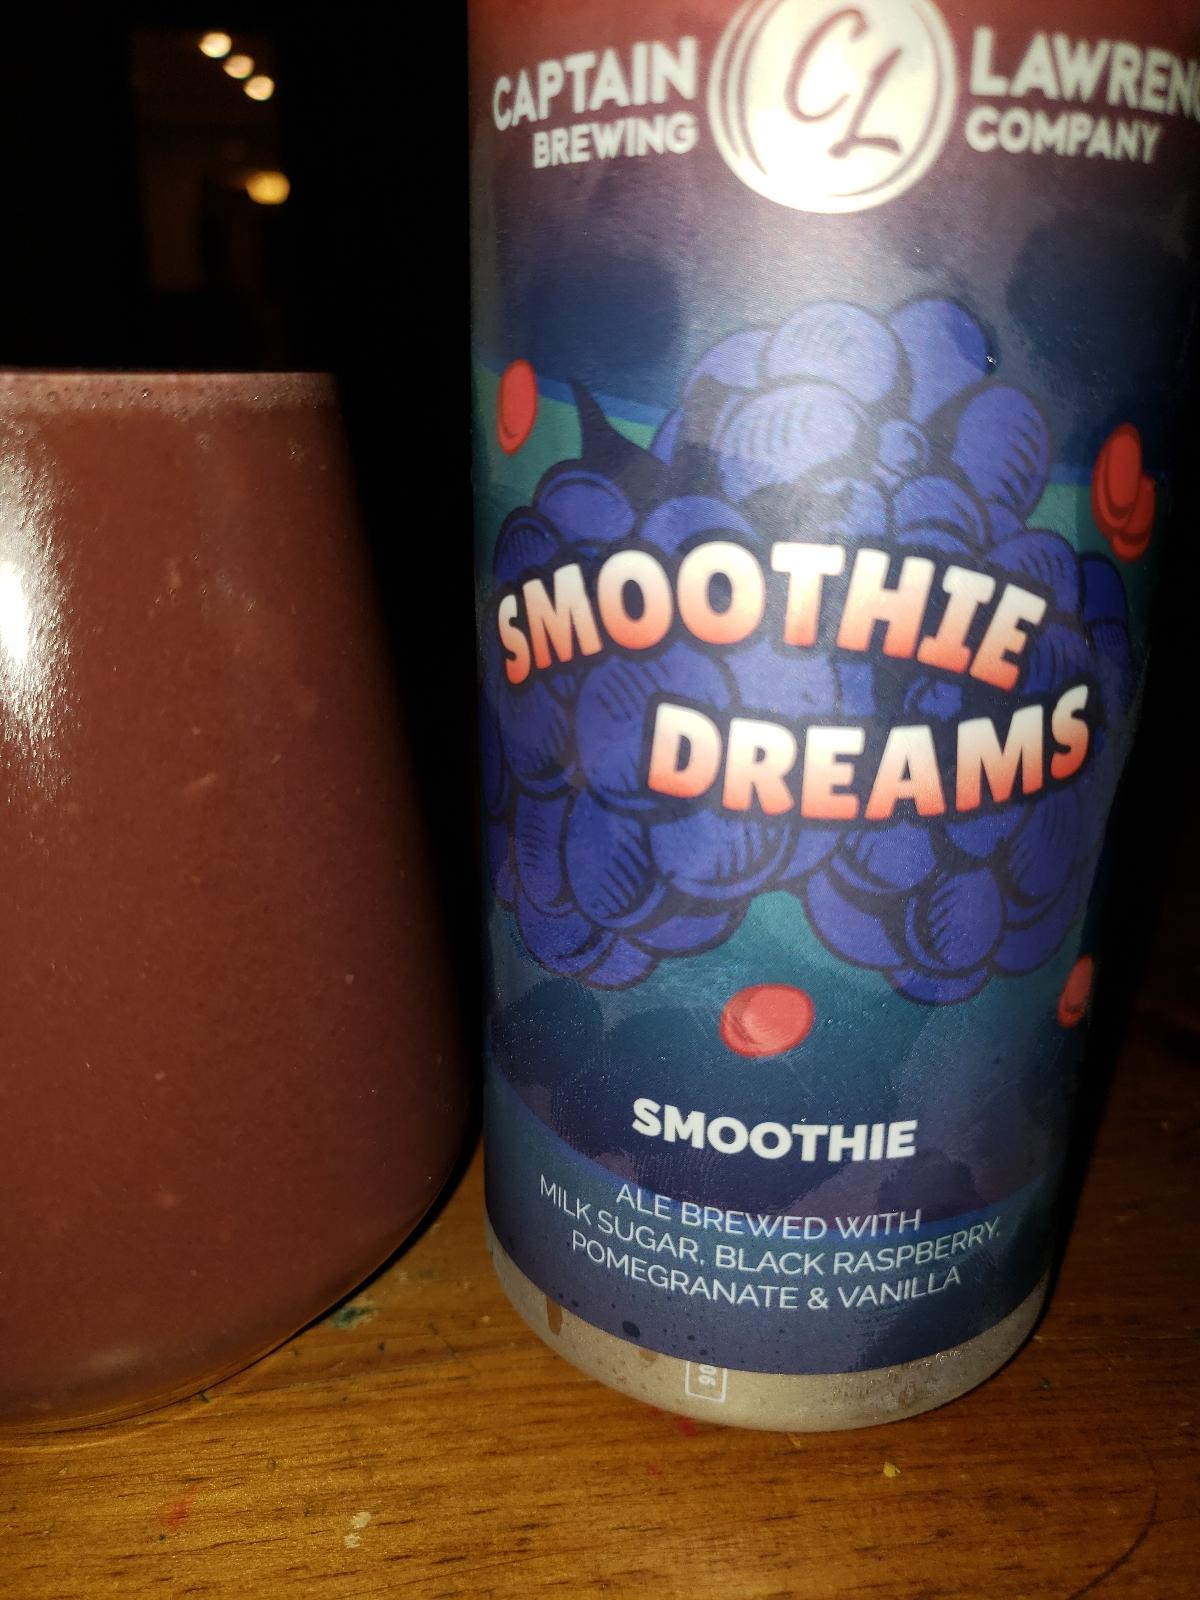 Smoothie Dreams - Milk Sugar, Black Raspberry, Pomegranate, and Vanilla